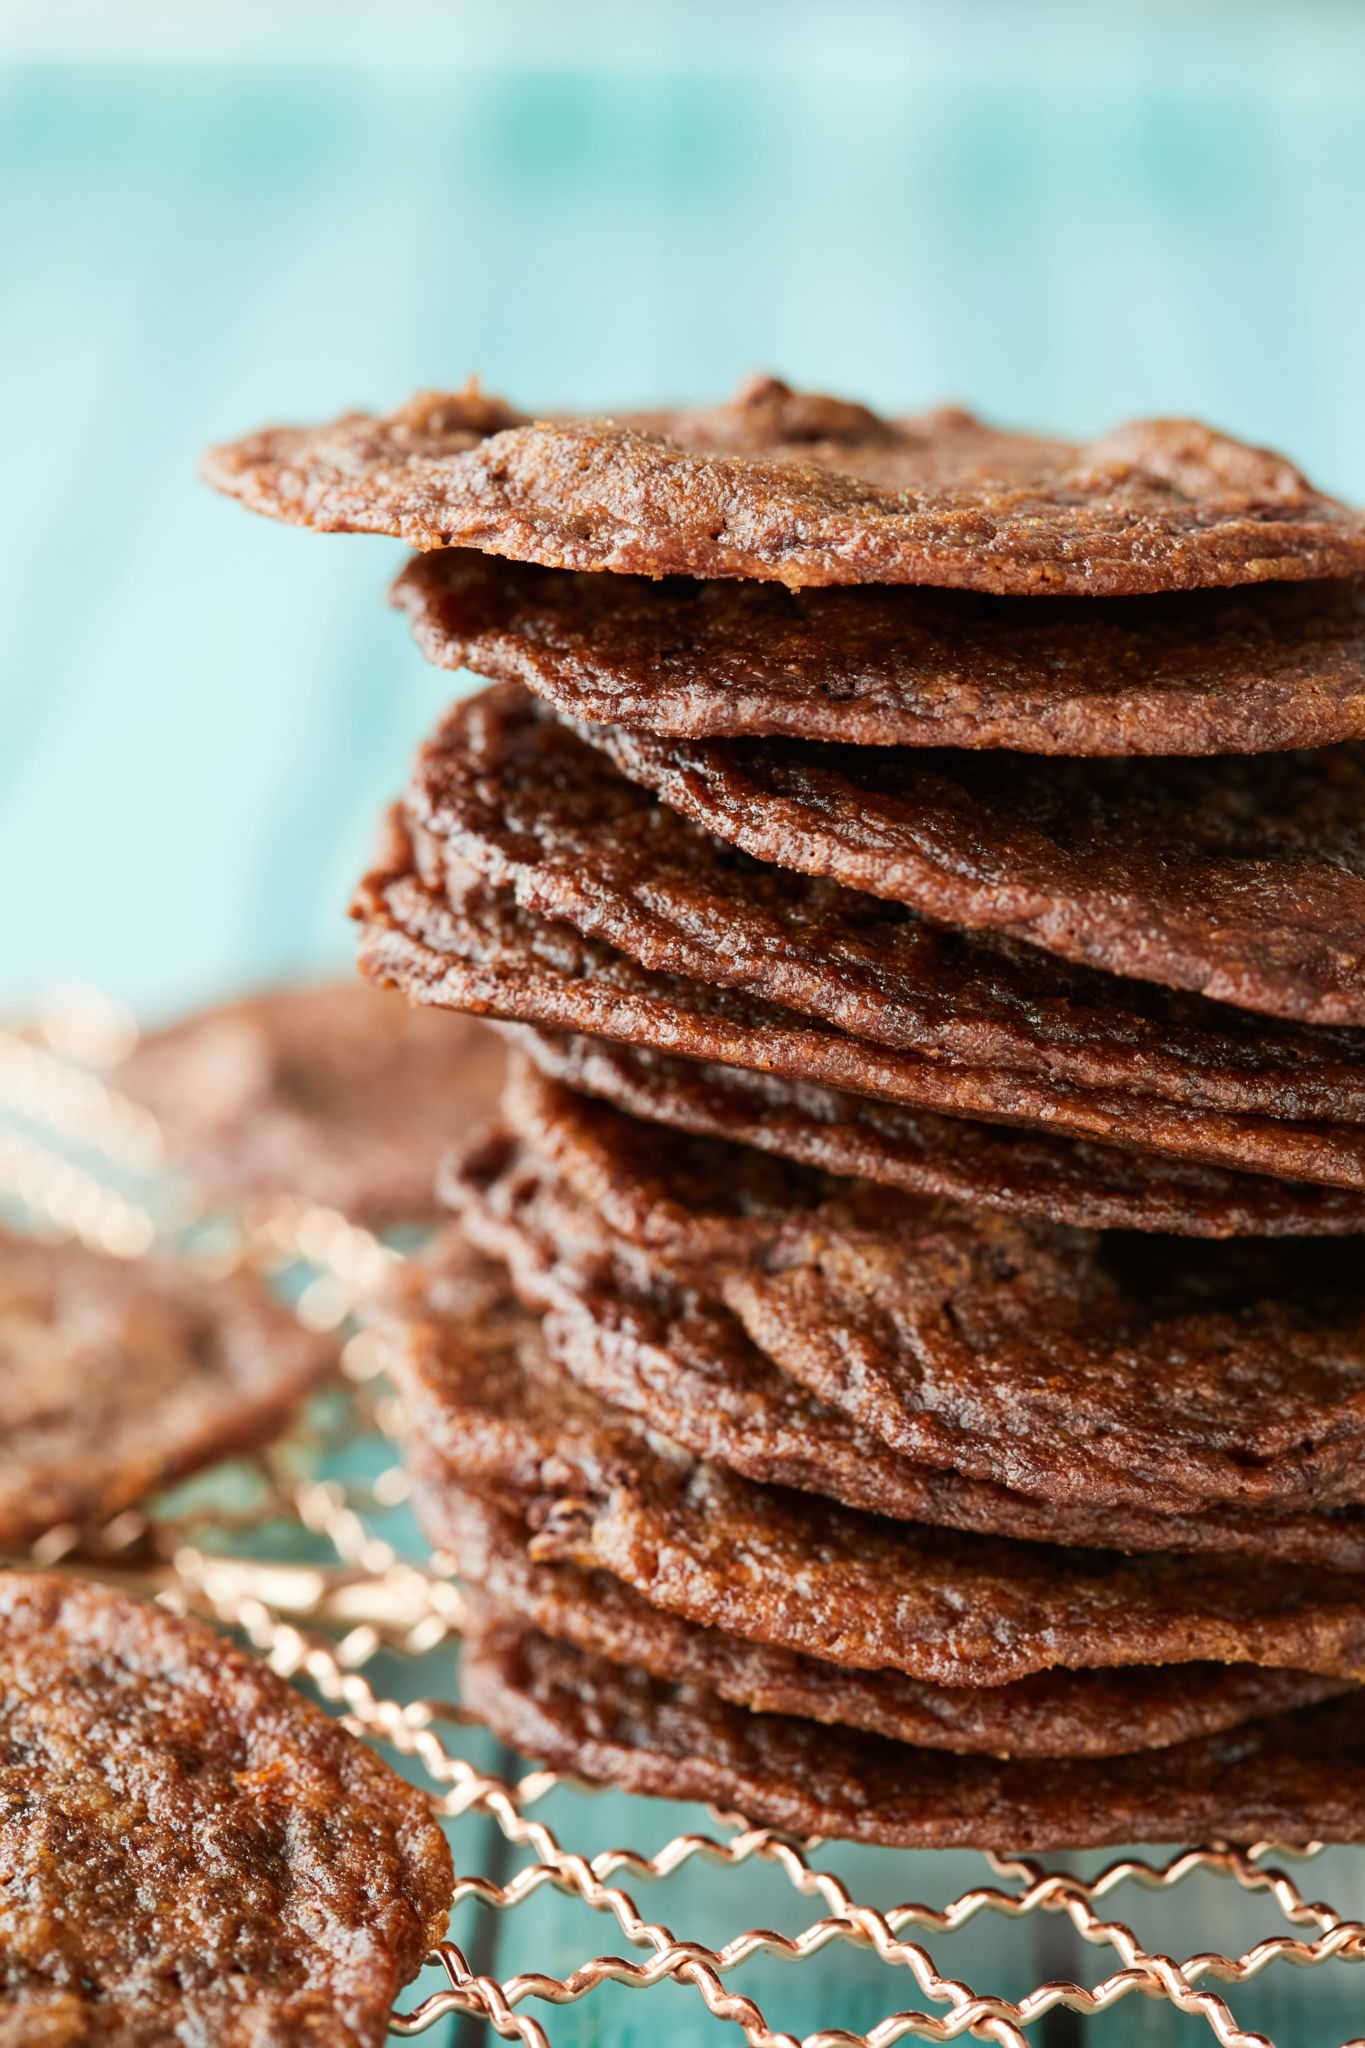 https://www.biggerbolderbaking.com/wp-content/uploads/2021/03/Thin-and-Crispy-Chocolate-Chip-Cookies2-scaled.jpg